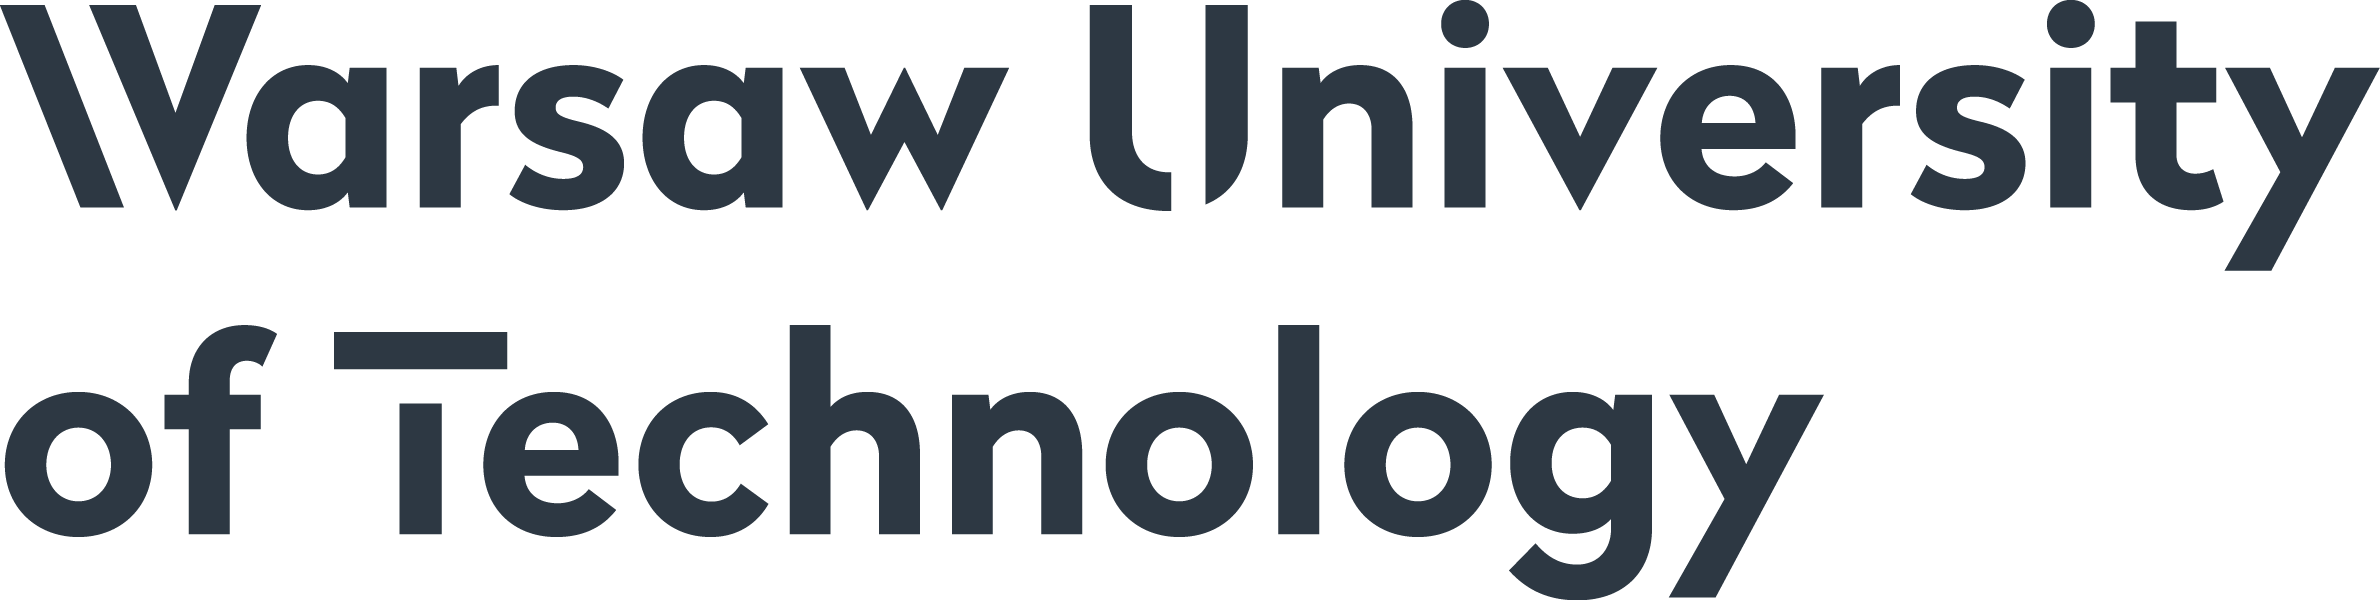 logo Warsaw University of Technology